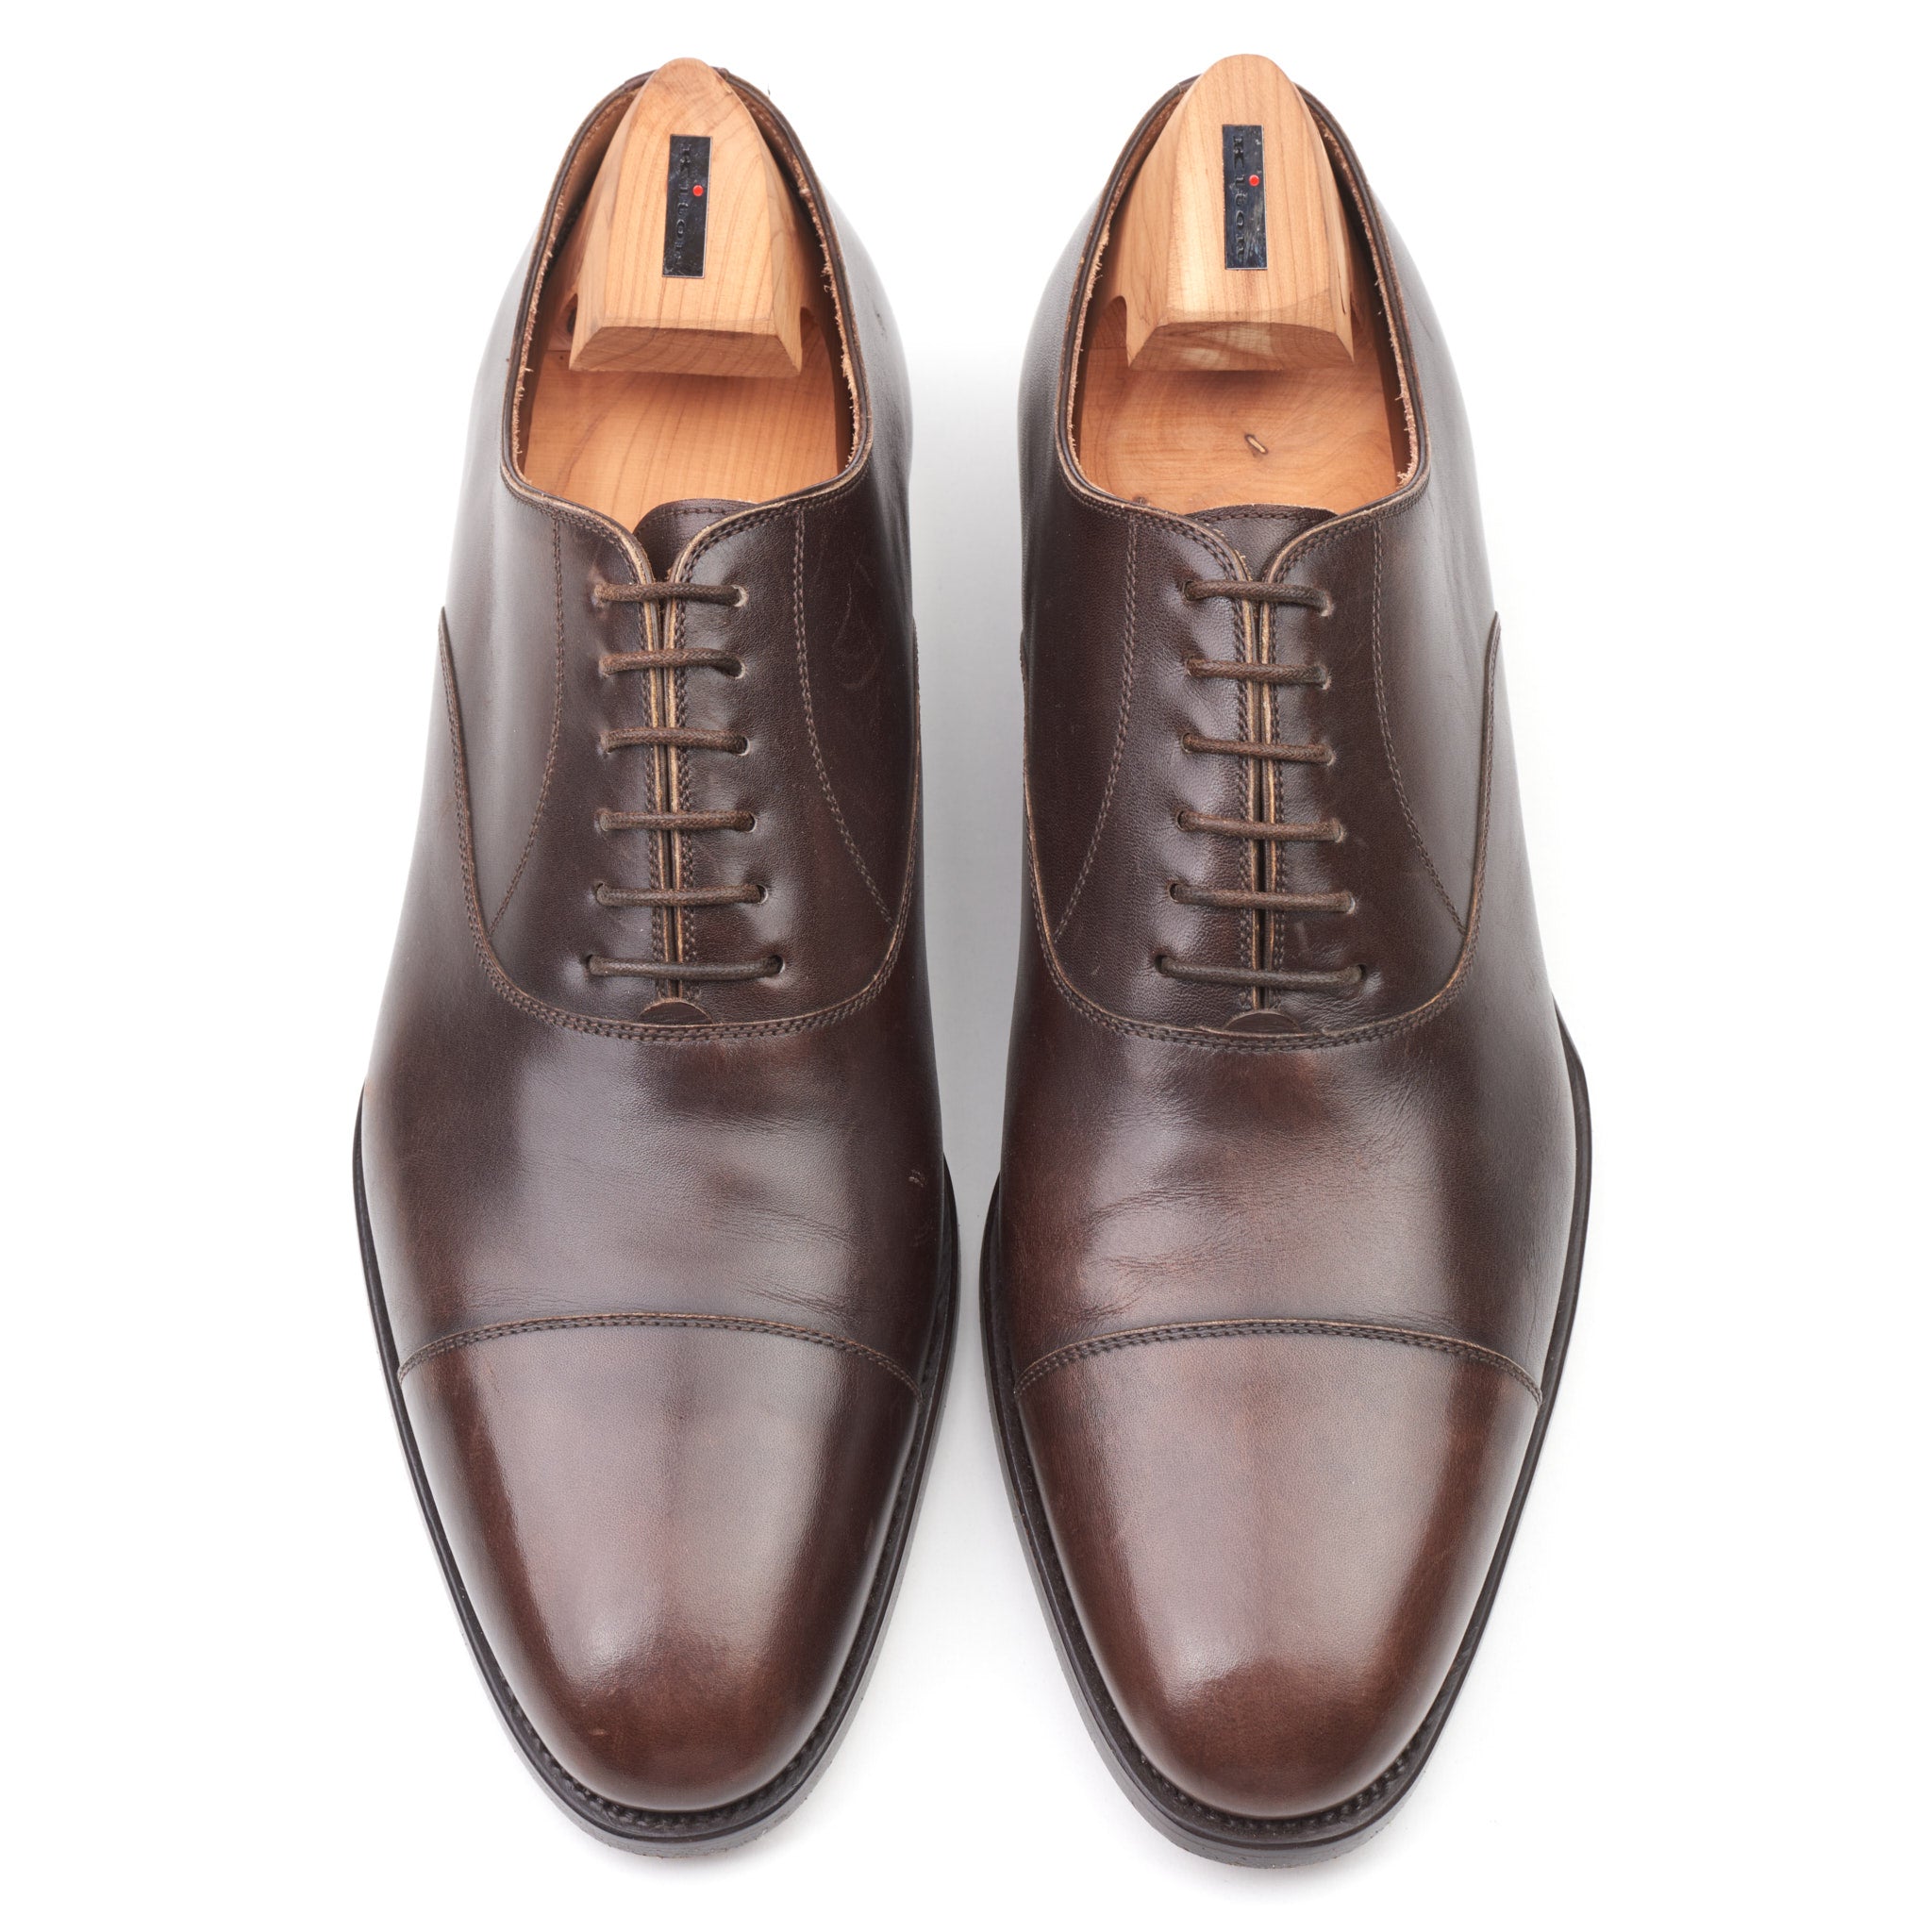 KITON Napoli Handmade Brown Calfskin Leather Oxford Shoes US 10 NEW with Box KITON